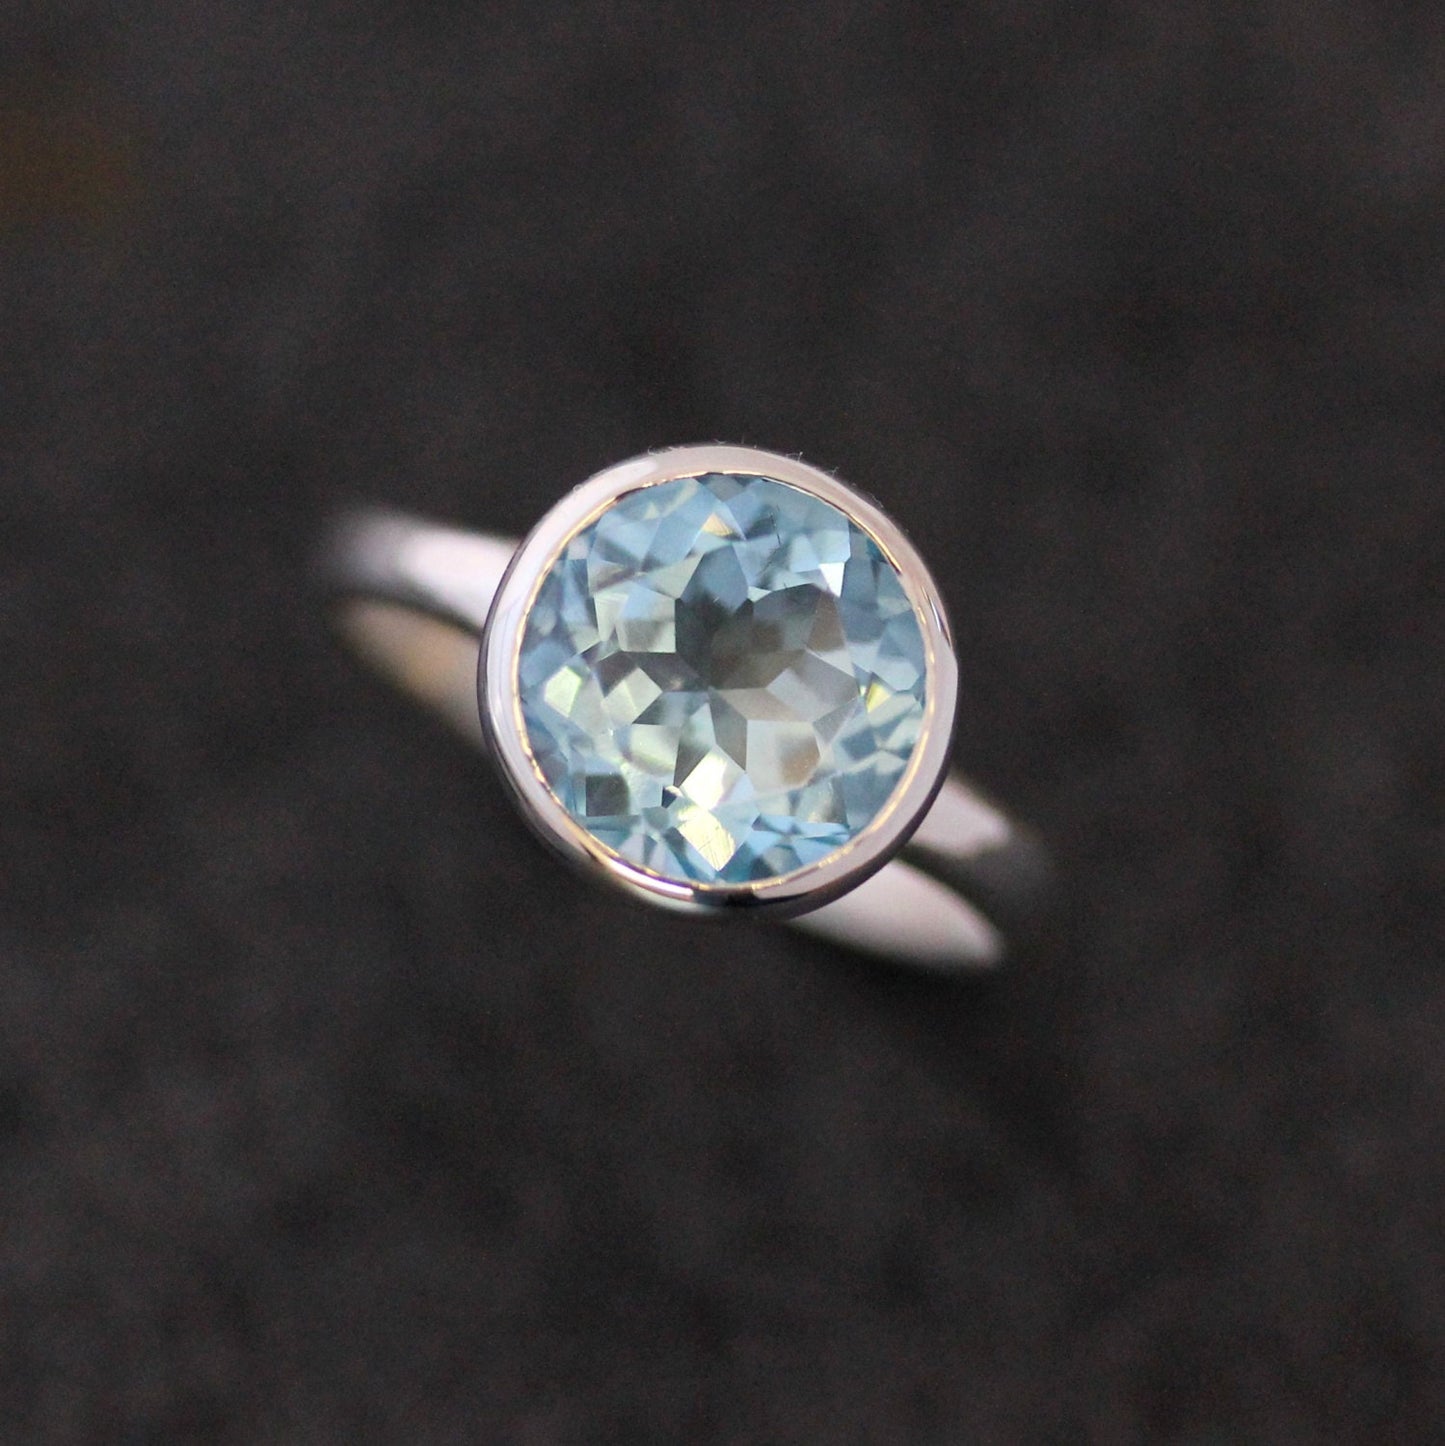 Handmade sterling silver ring with a Sky Blue Topaz Birthstone stone.